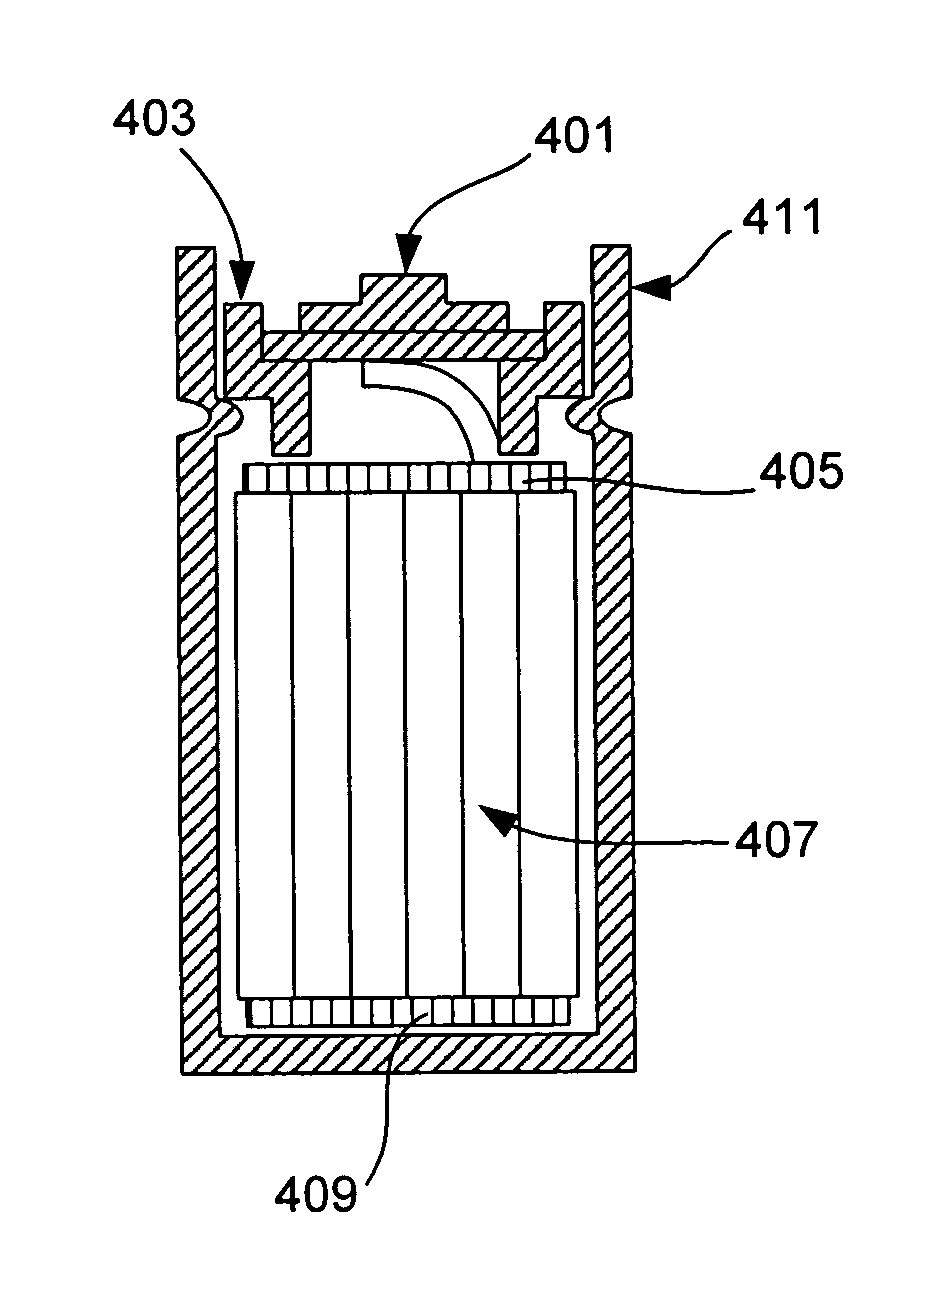 Method of manufacturing nickel zinc batteries